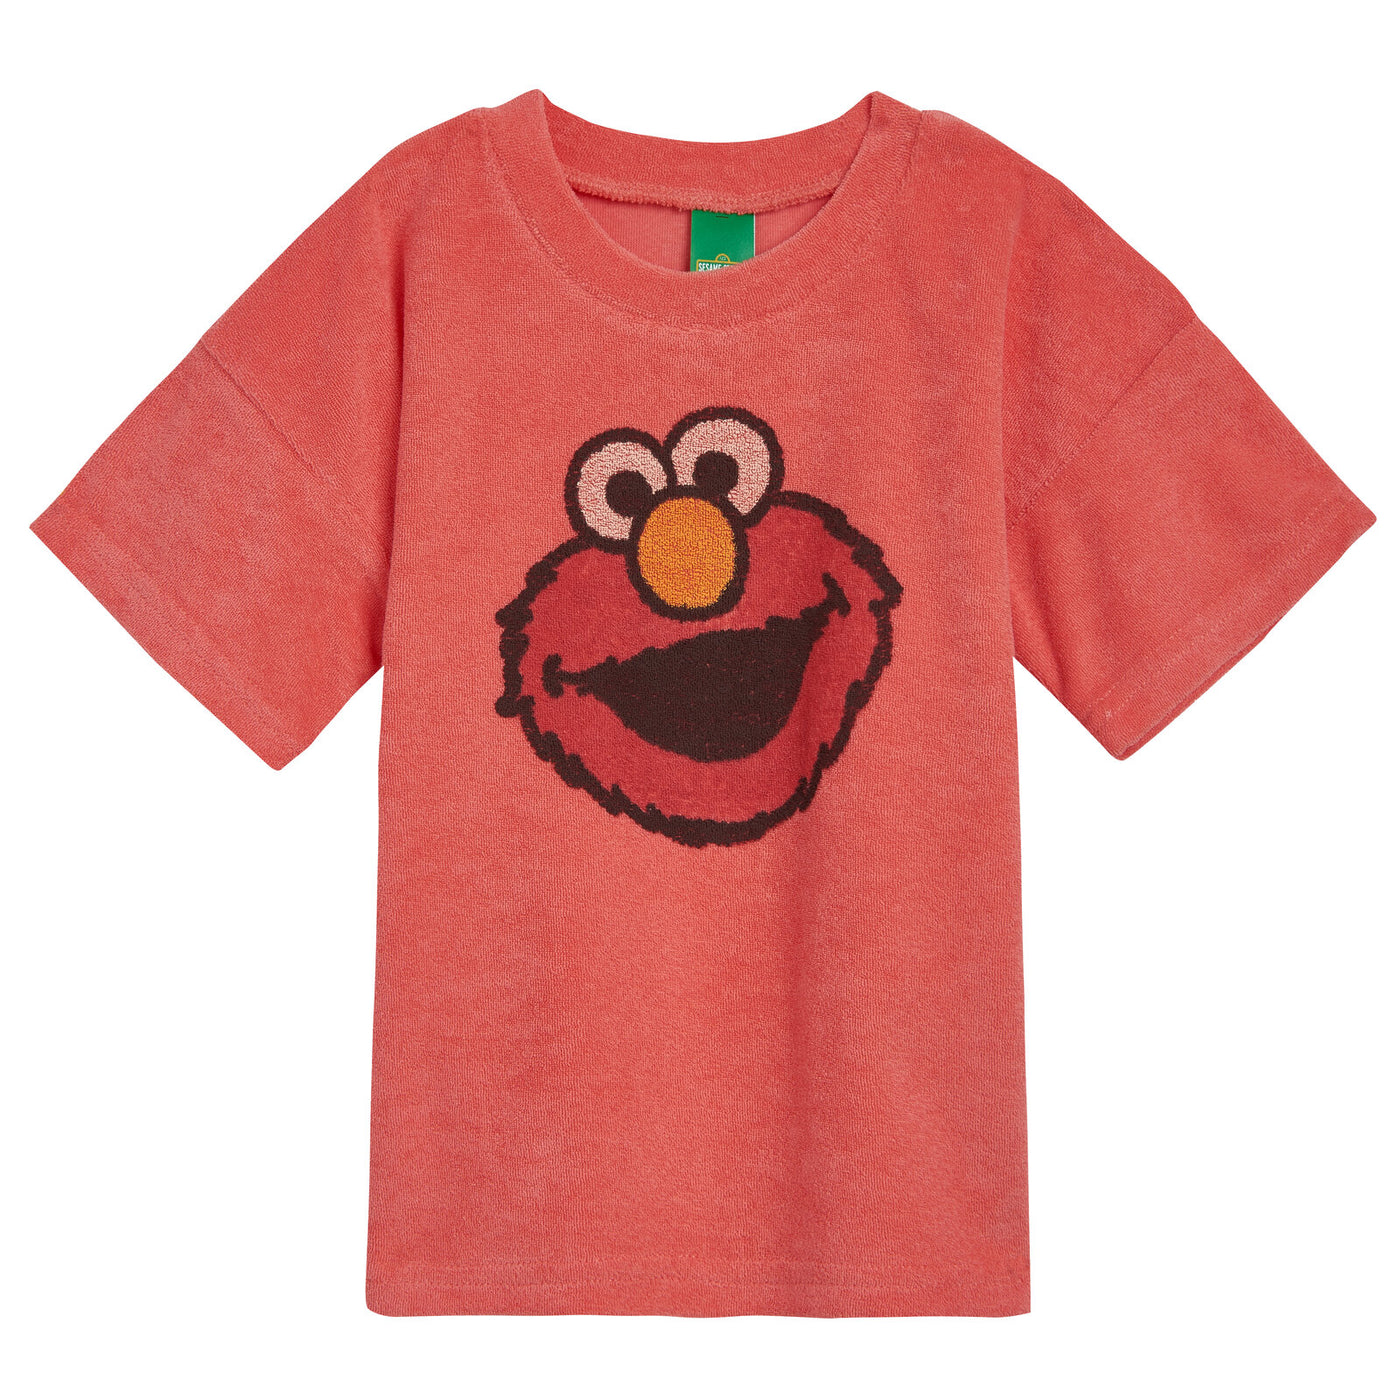 Sesame Street Elmo T-Shirt Shorts and Hat 3 Piece